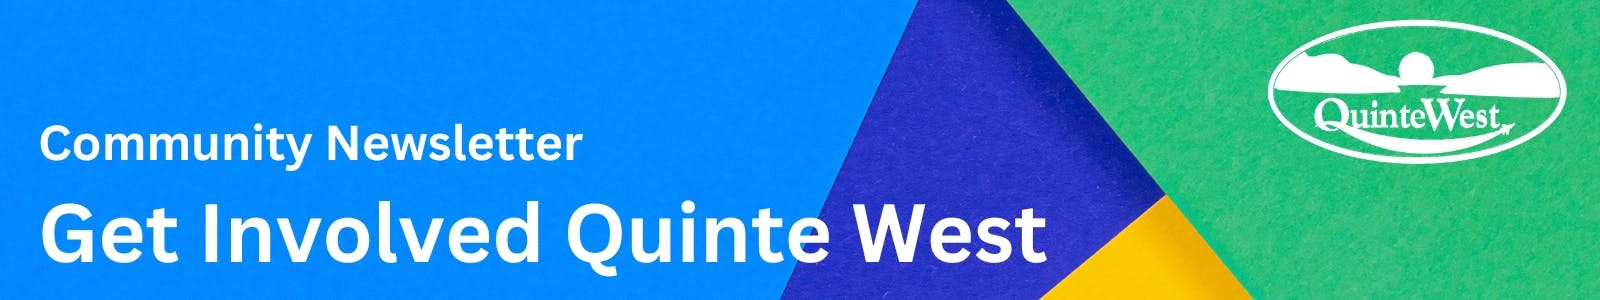 Community newsletter banner image; reads 'Community newsletter Get Involved Quinte West'